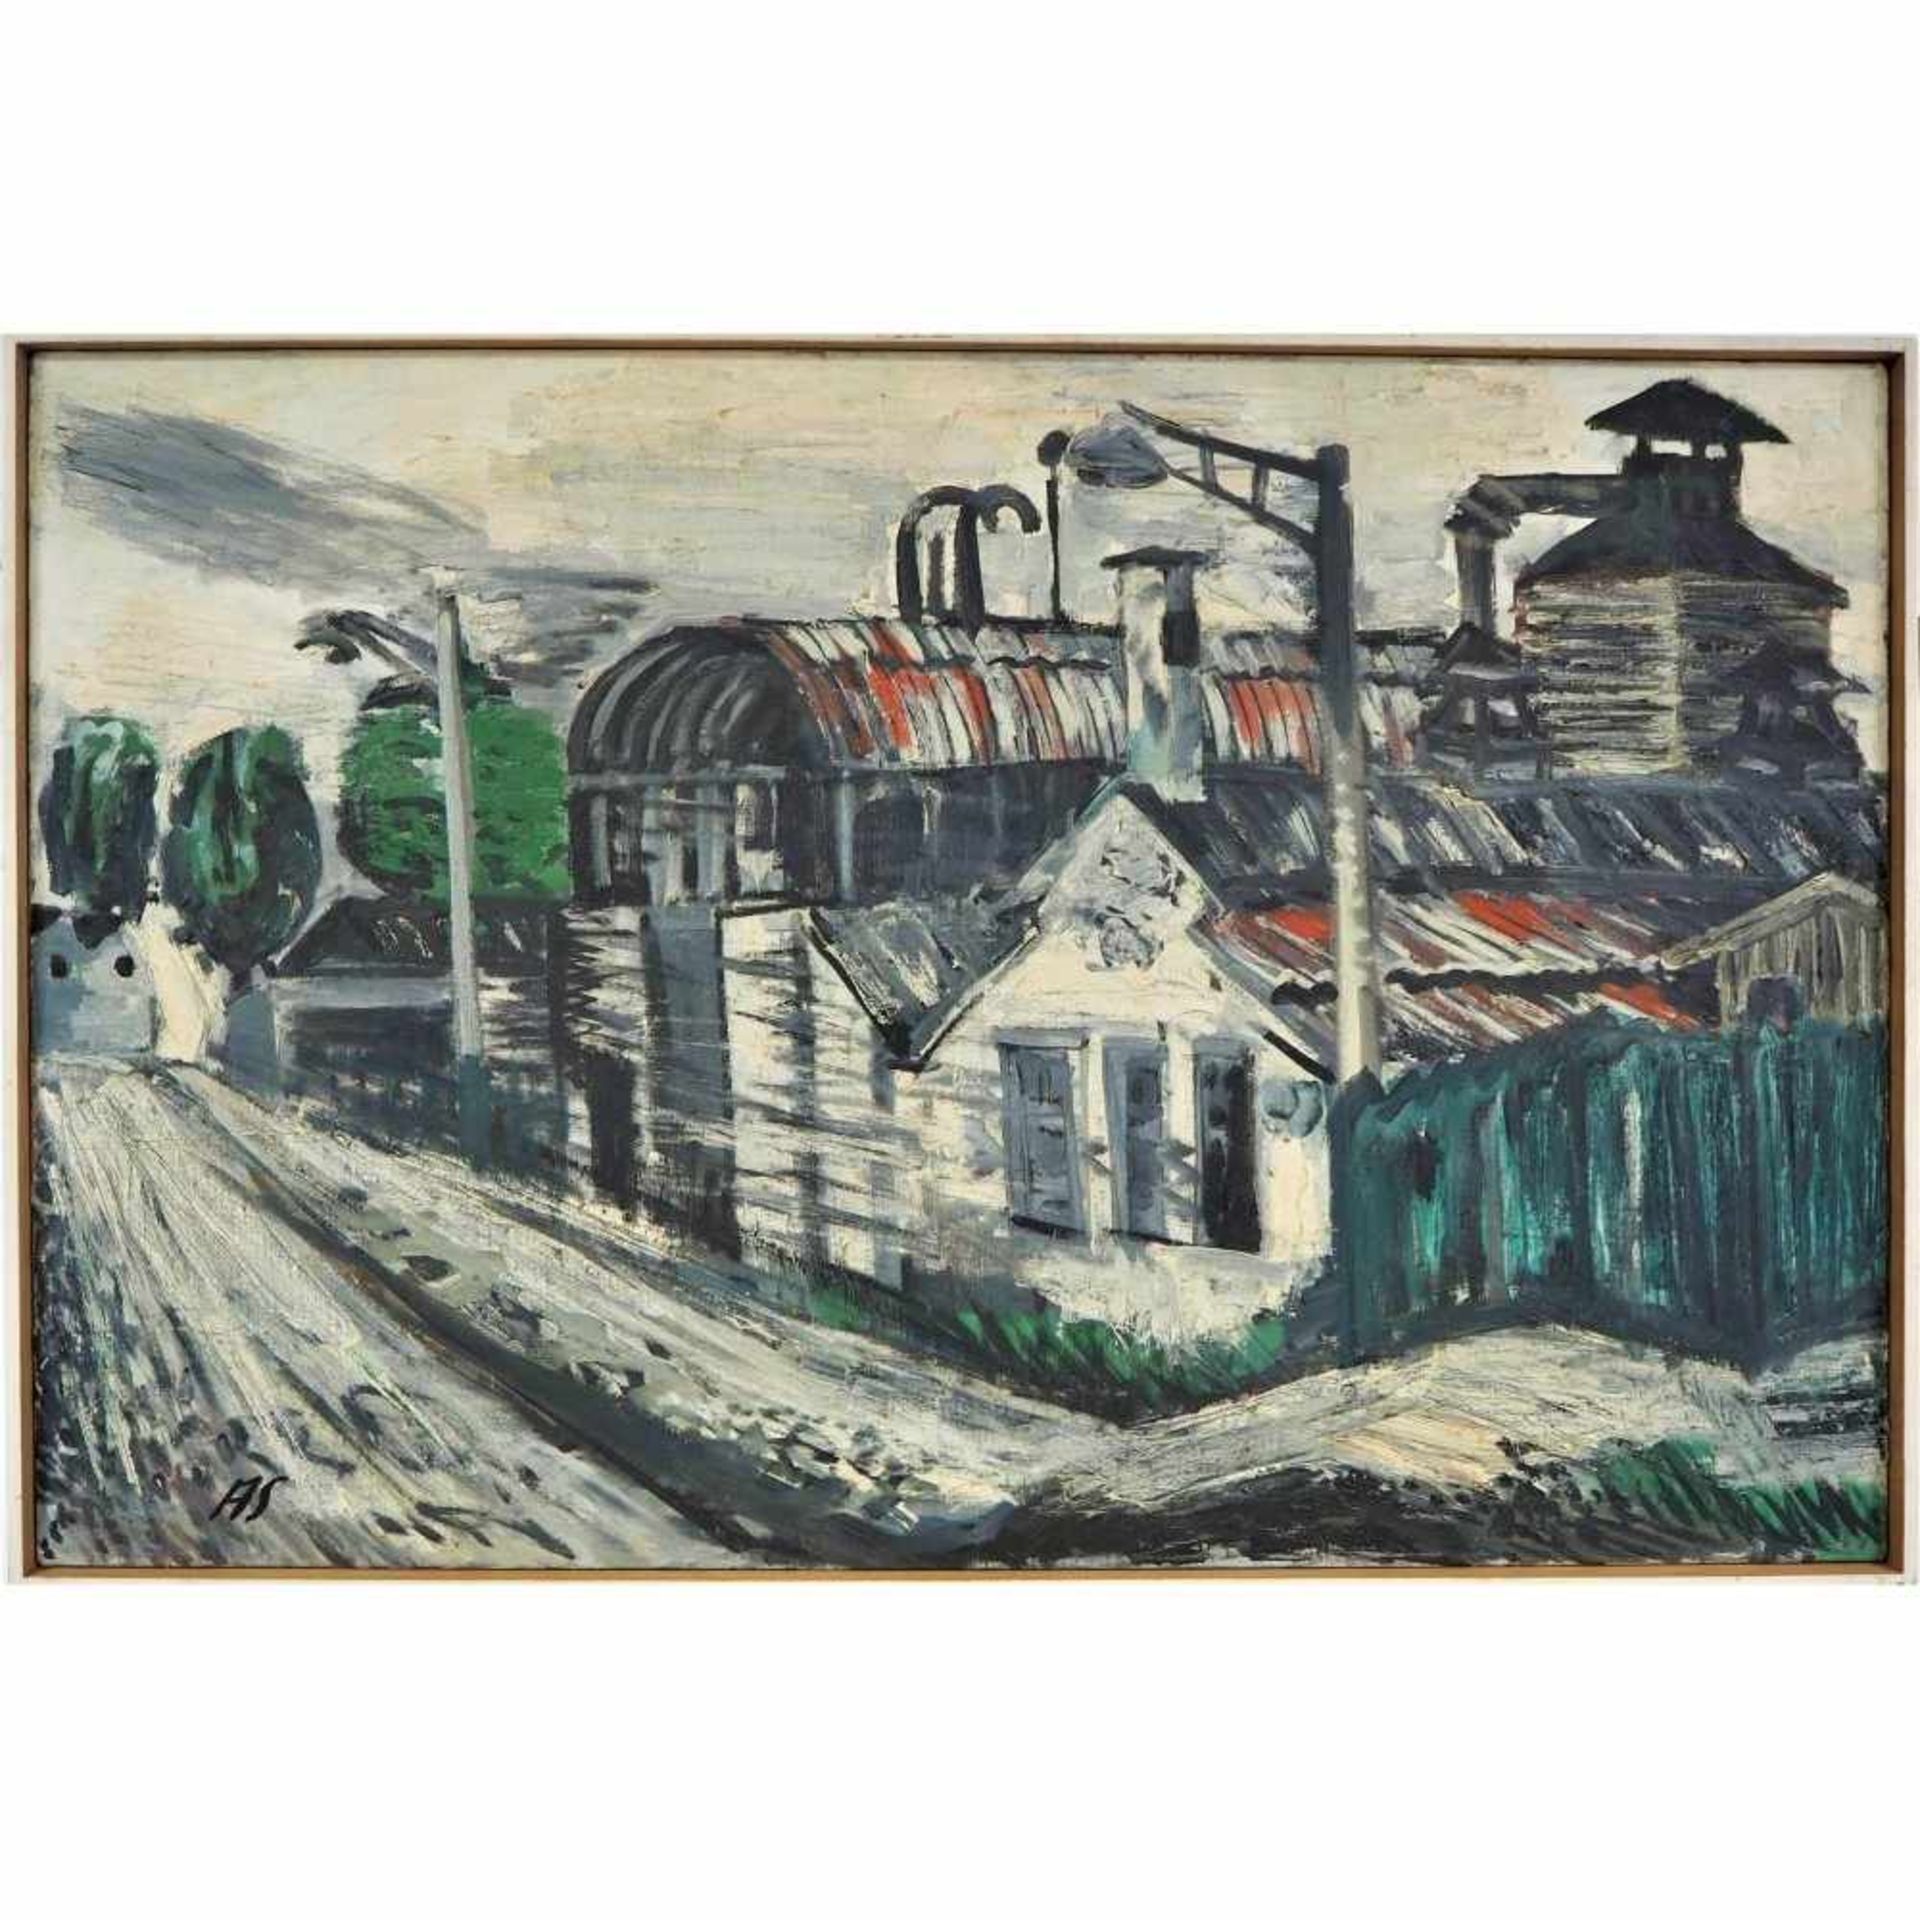 Gemälde Adolf Silberberger 1961Großes Gemälde Öl auf Leinwand im Keilrahmen gespannt, Darstellung